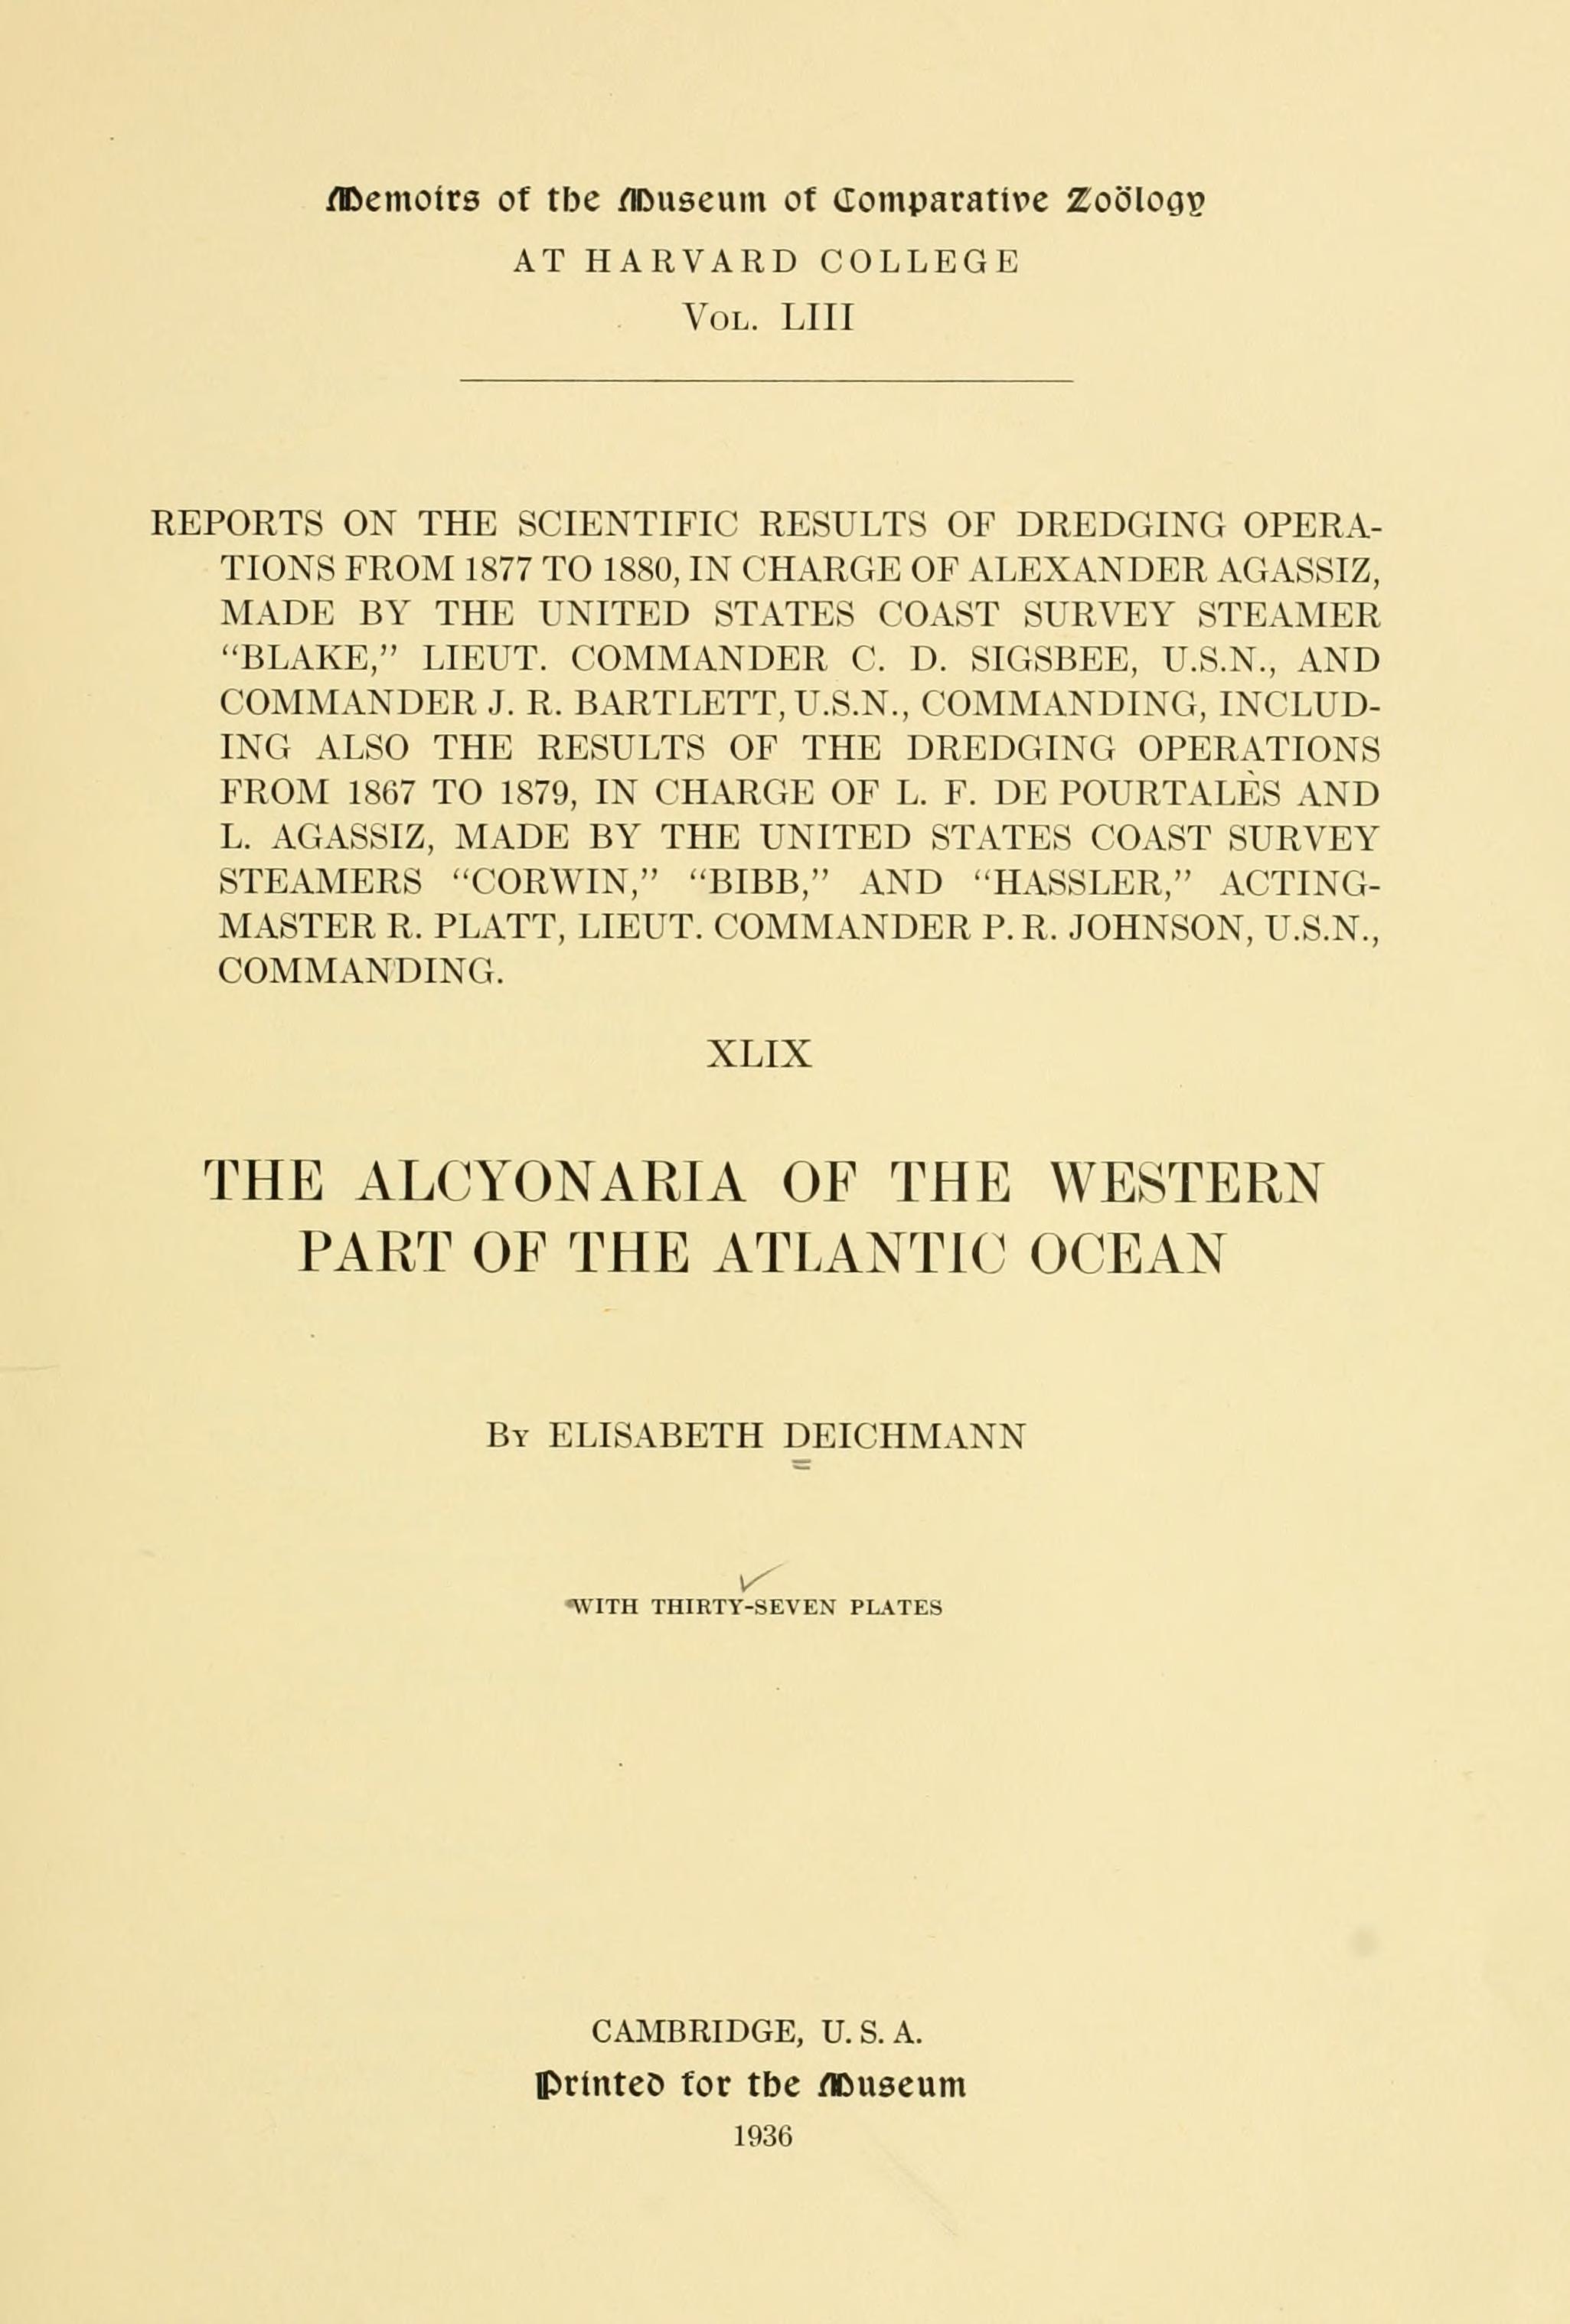 Media of type text, Deichmann 1936. Description:MCZ Memoirs Vol. LIII